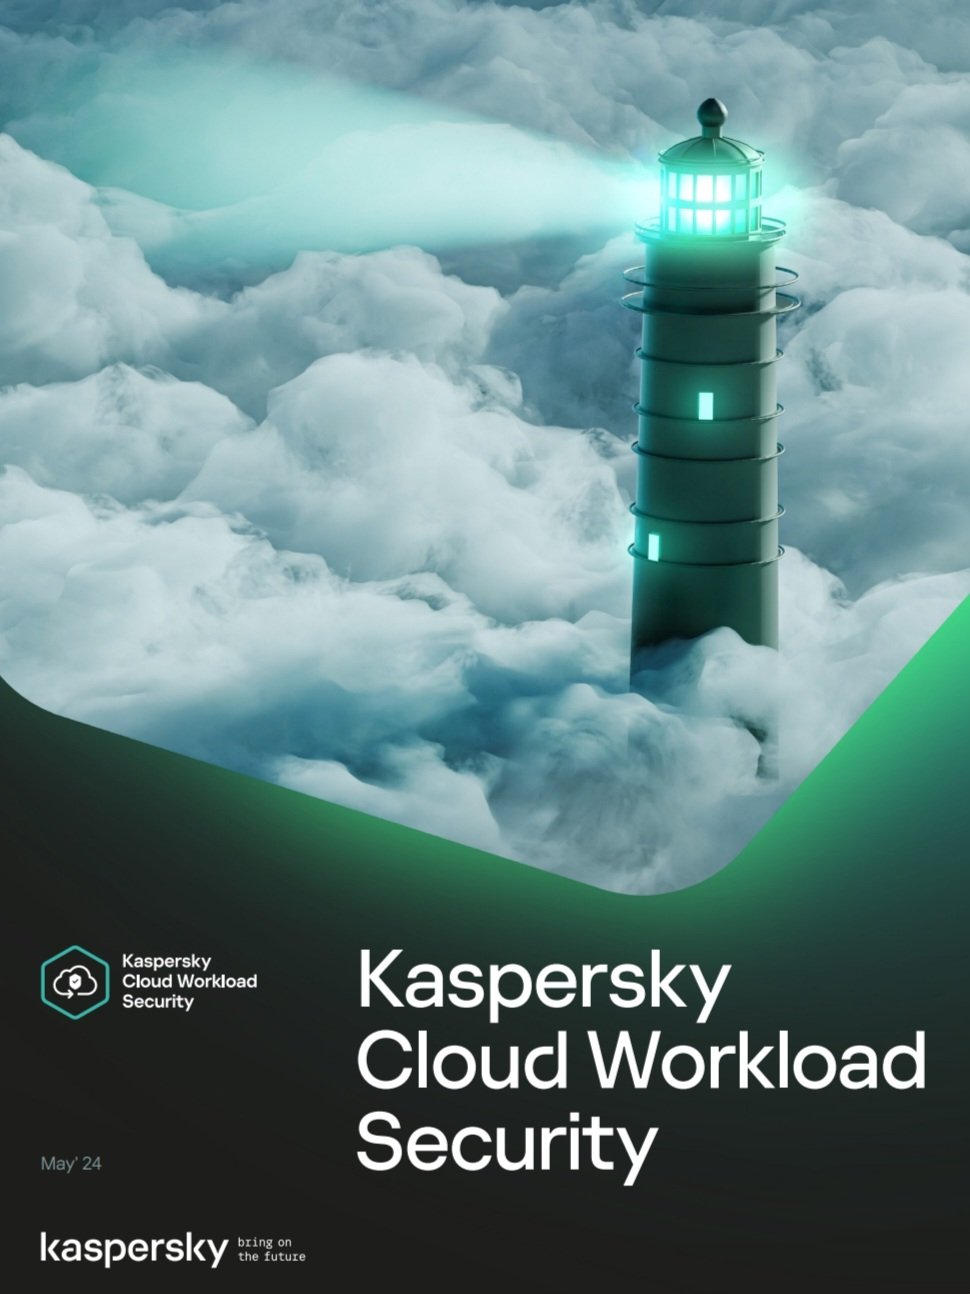 Safeguard your cloud environment introducing Kaspersky Cloud Workload Security ecosystem